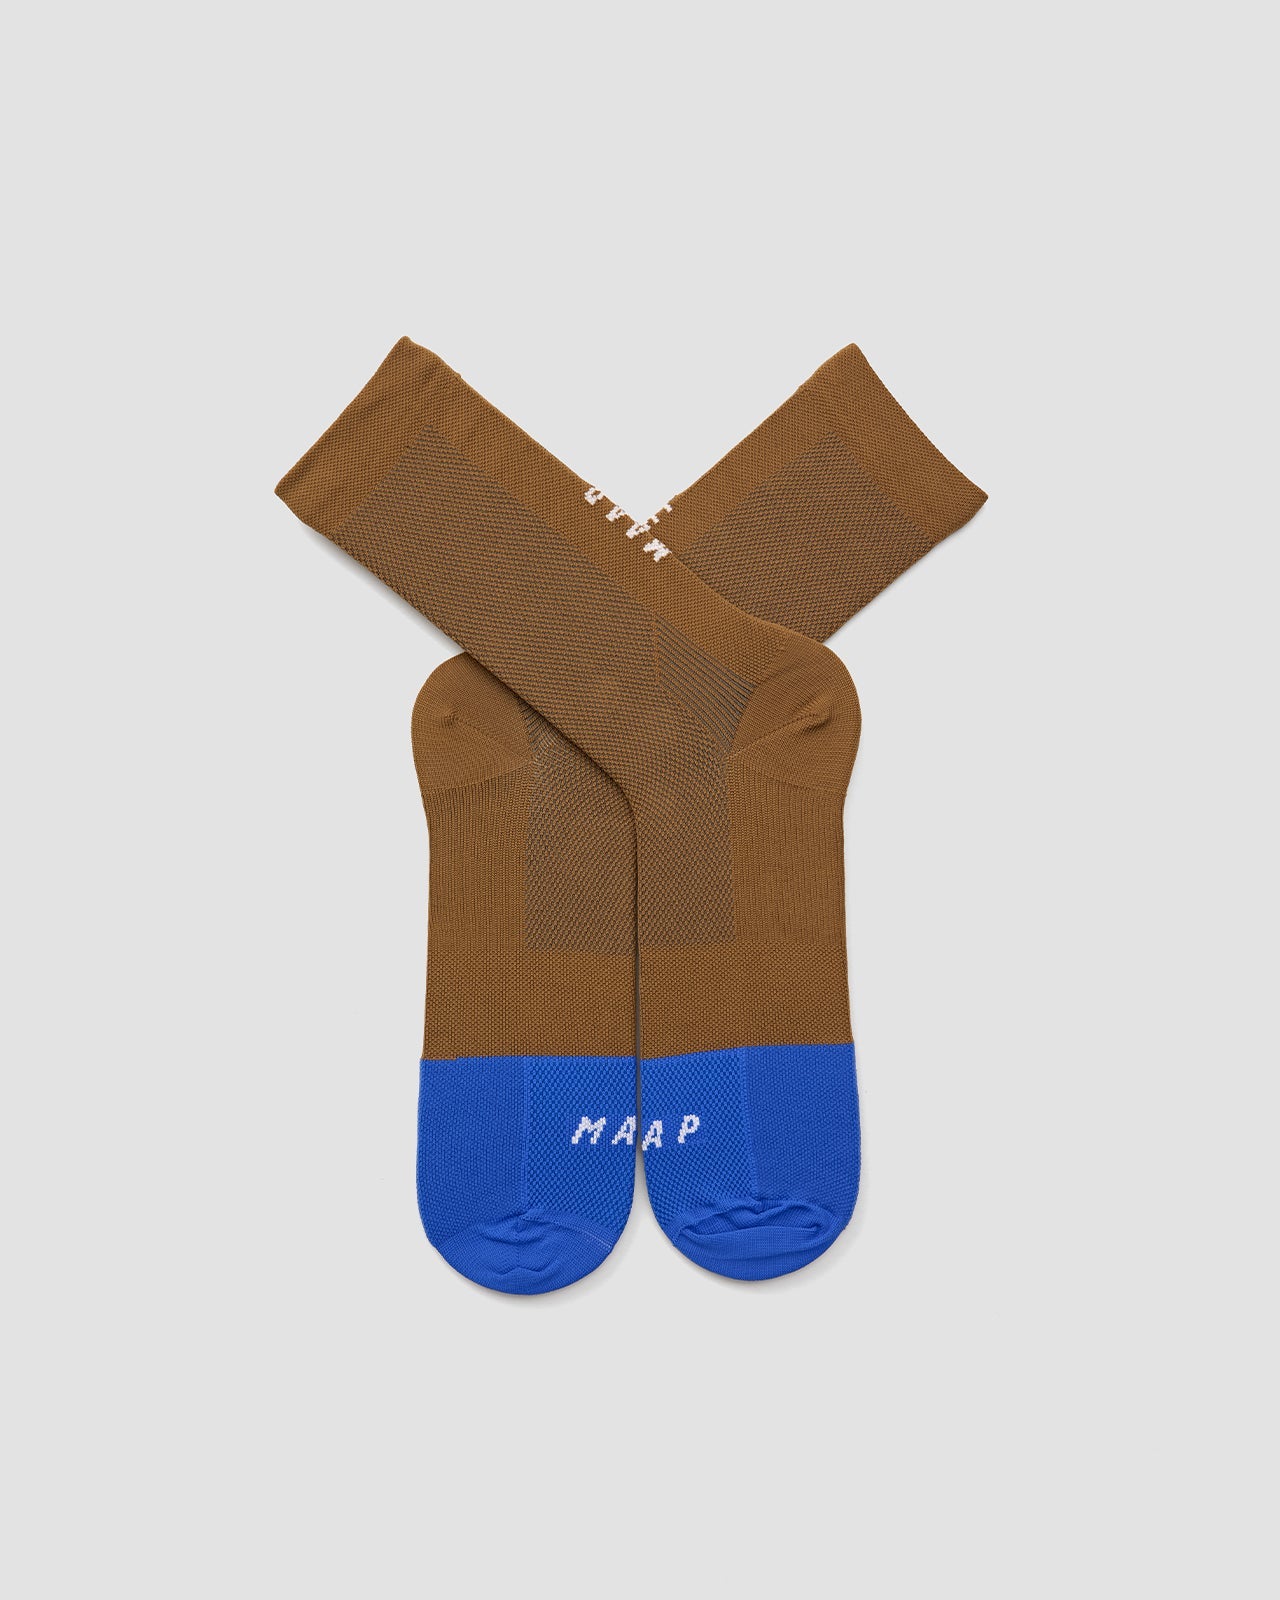 MAAP Division Sock - Otter